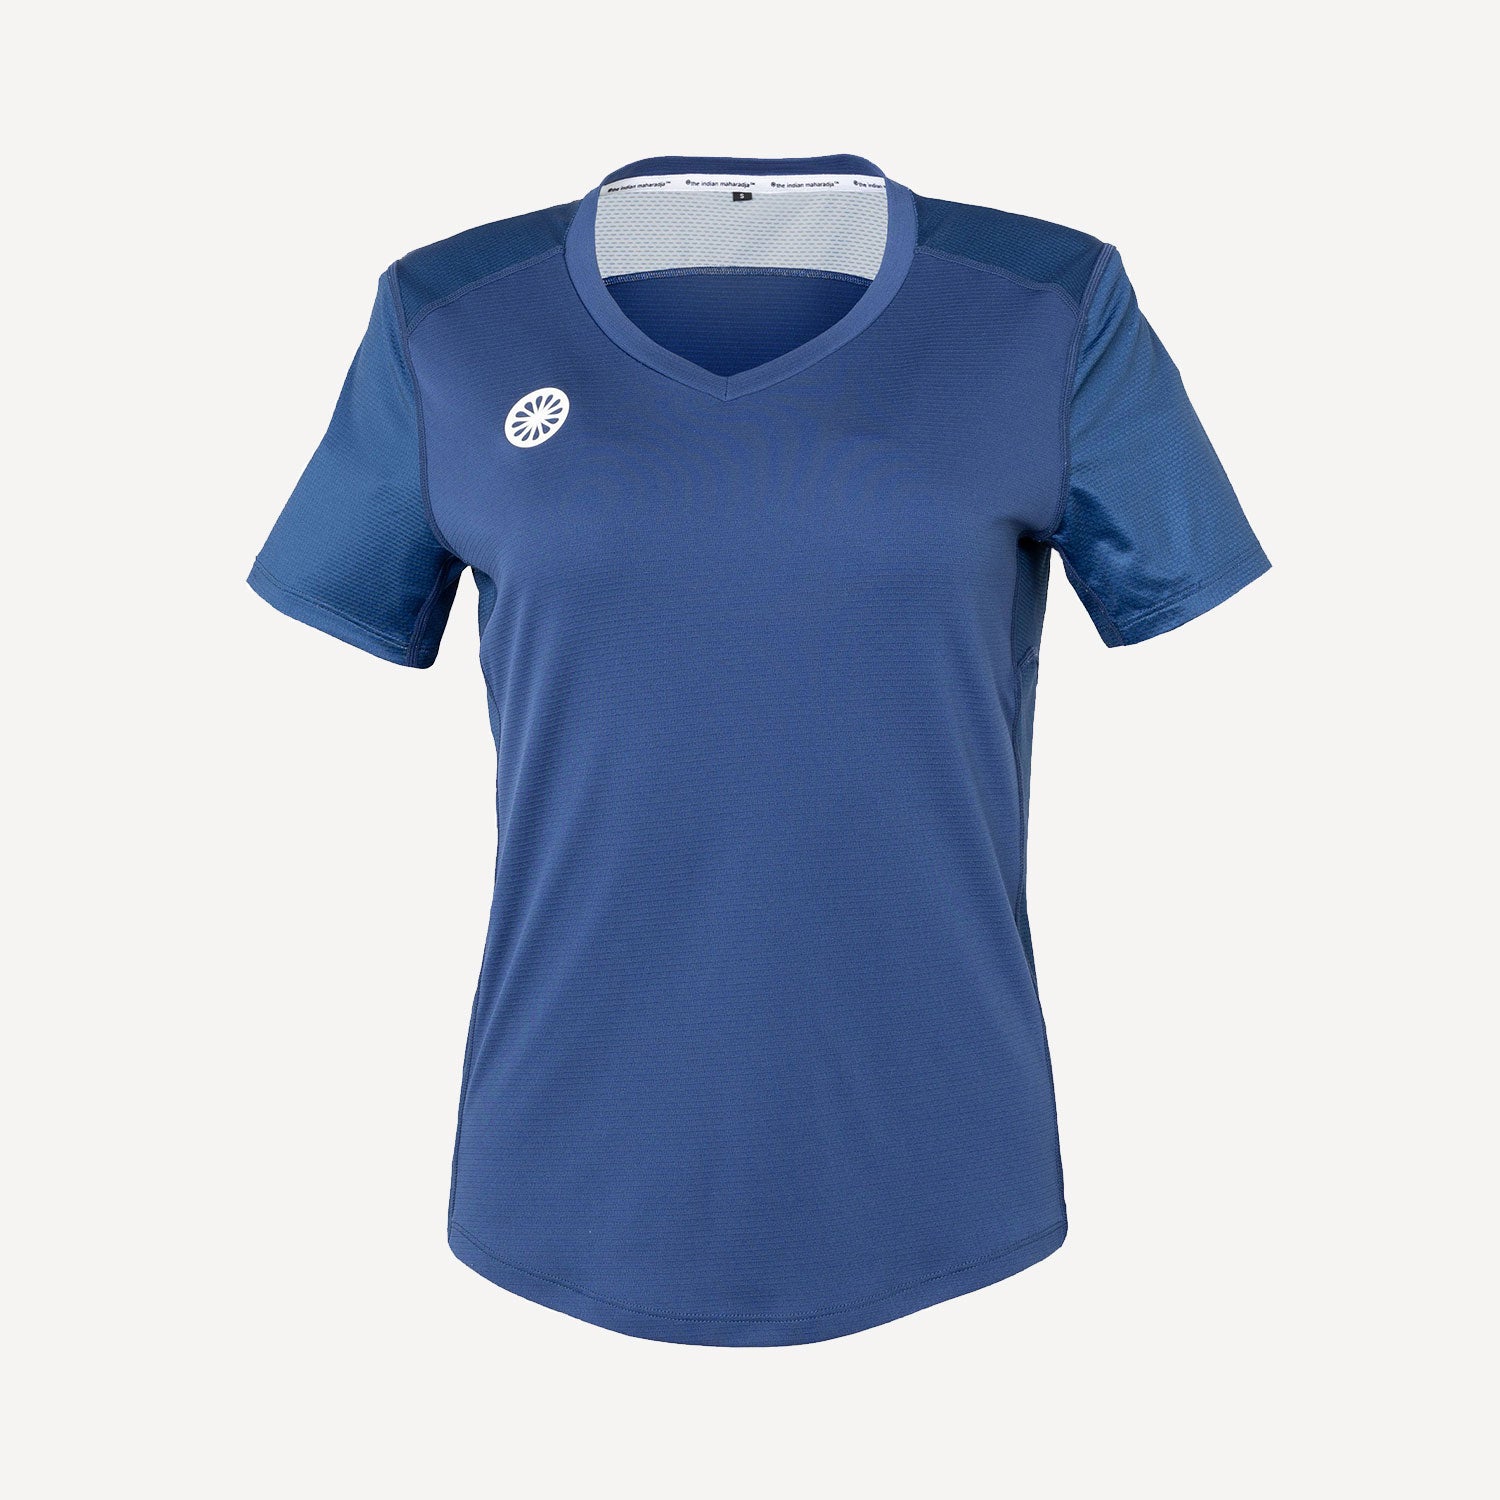 The Indian Maharadja Kadiri Girls' Agility Tennis Shirt - Blue (1)